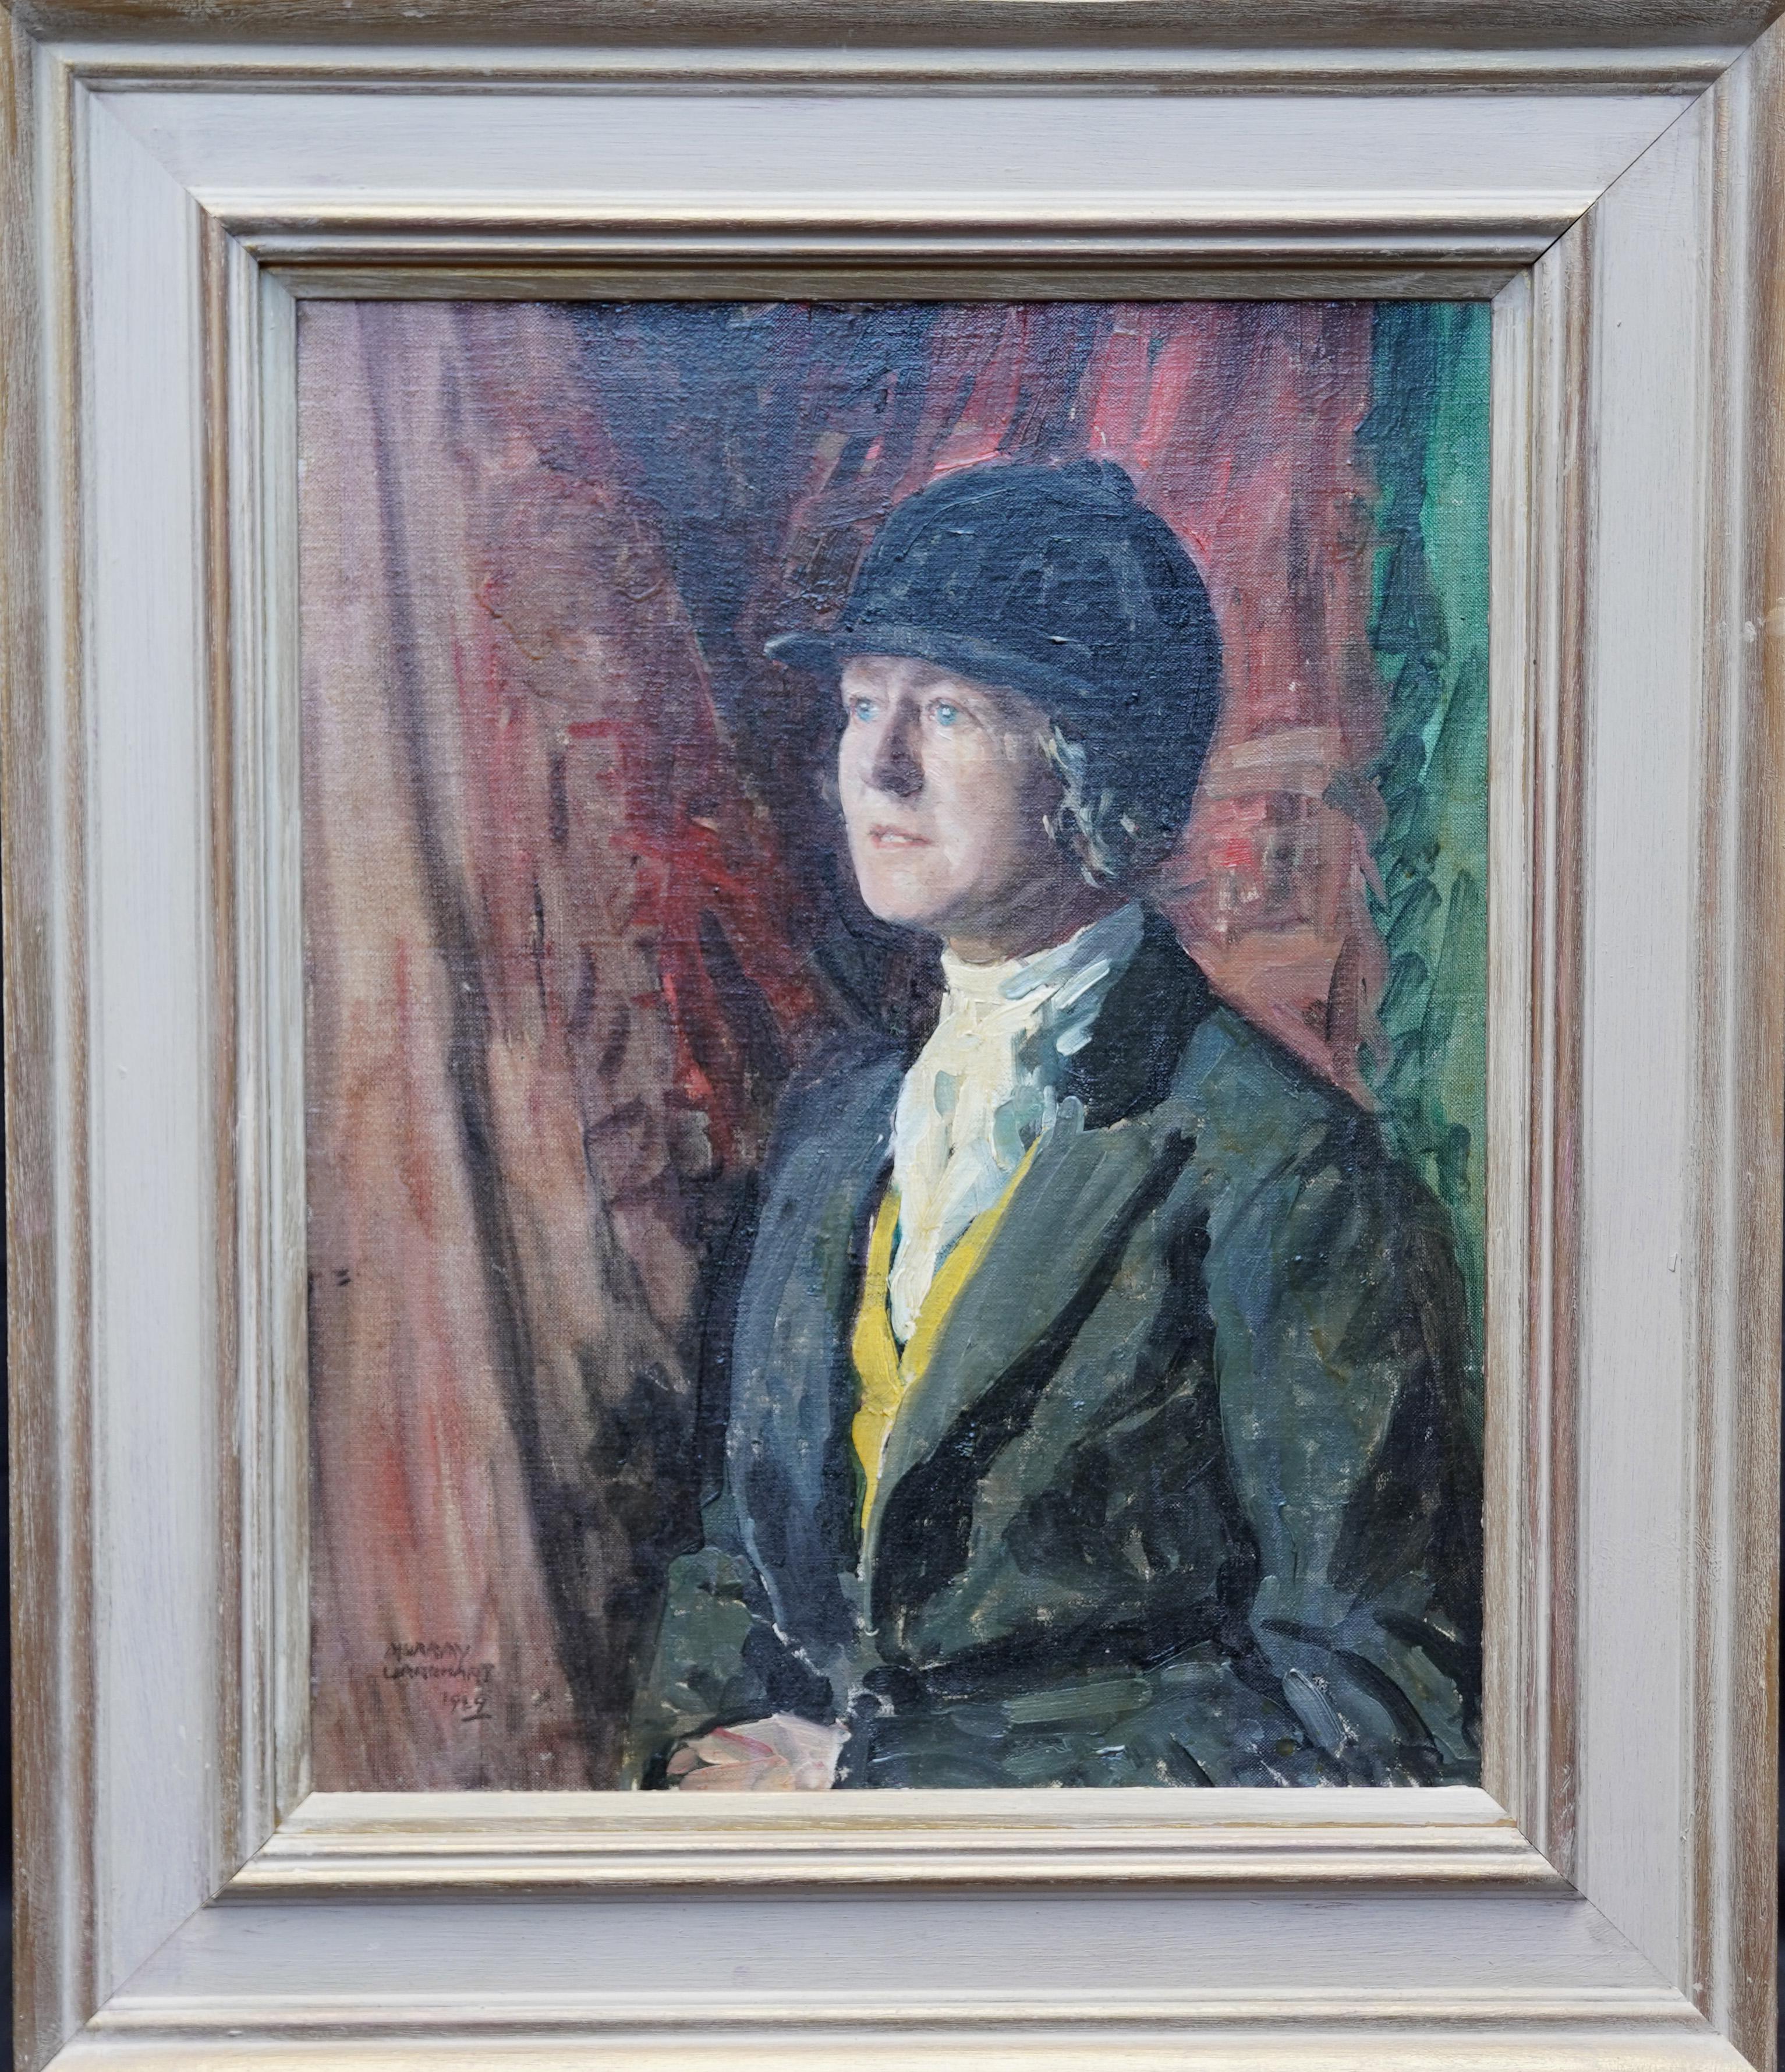 David Murray Urquhart Portrait Painting - Hunting Lady - British thirties art female portrait oil painting horse riding